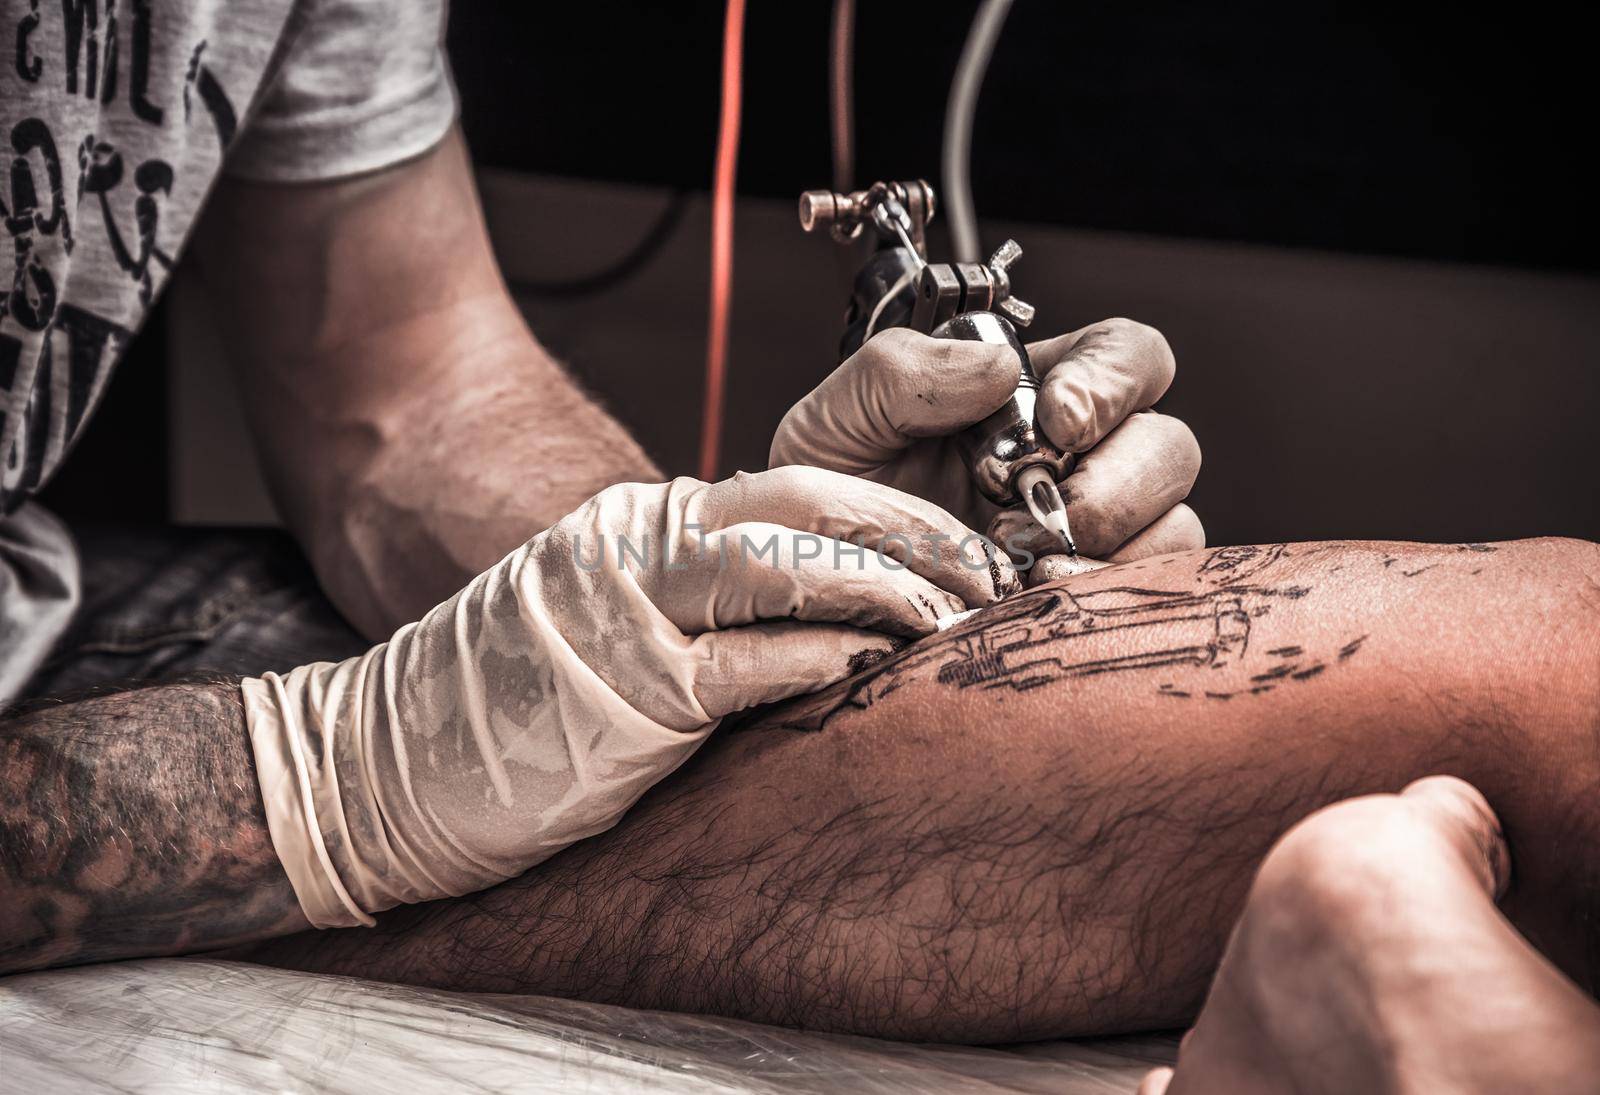 Tattoo artist at work by Proff